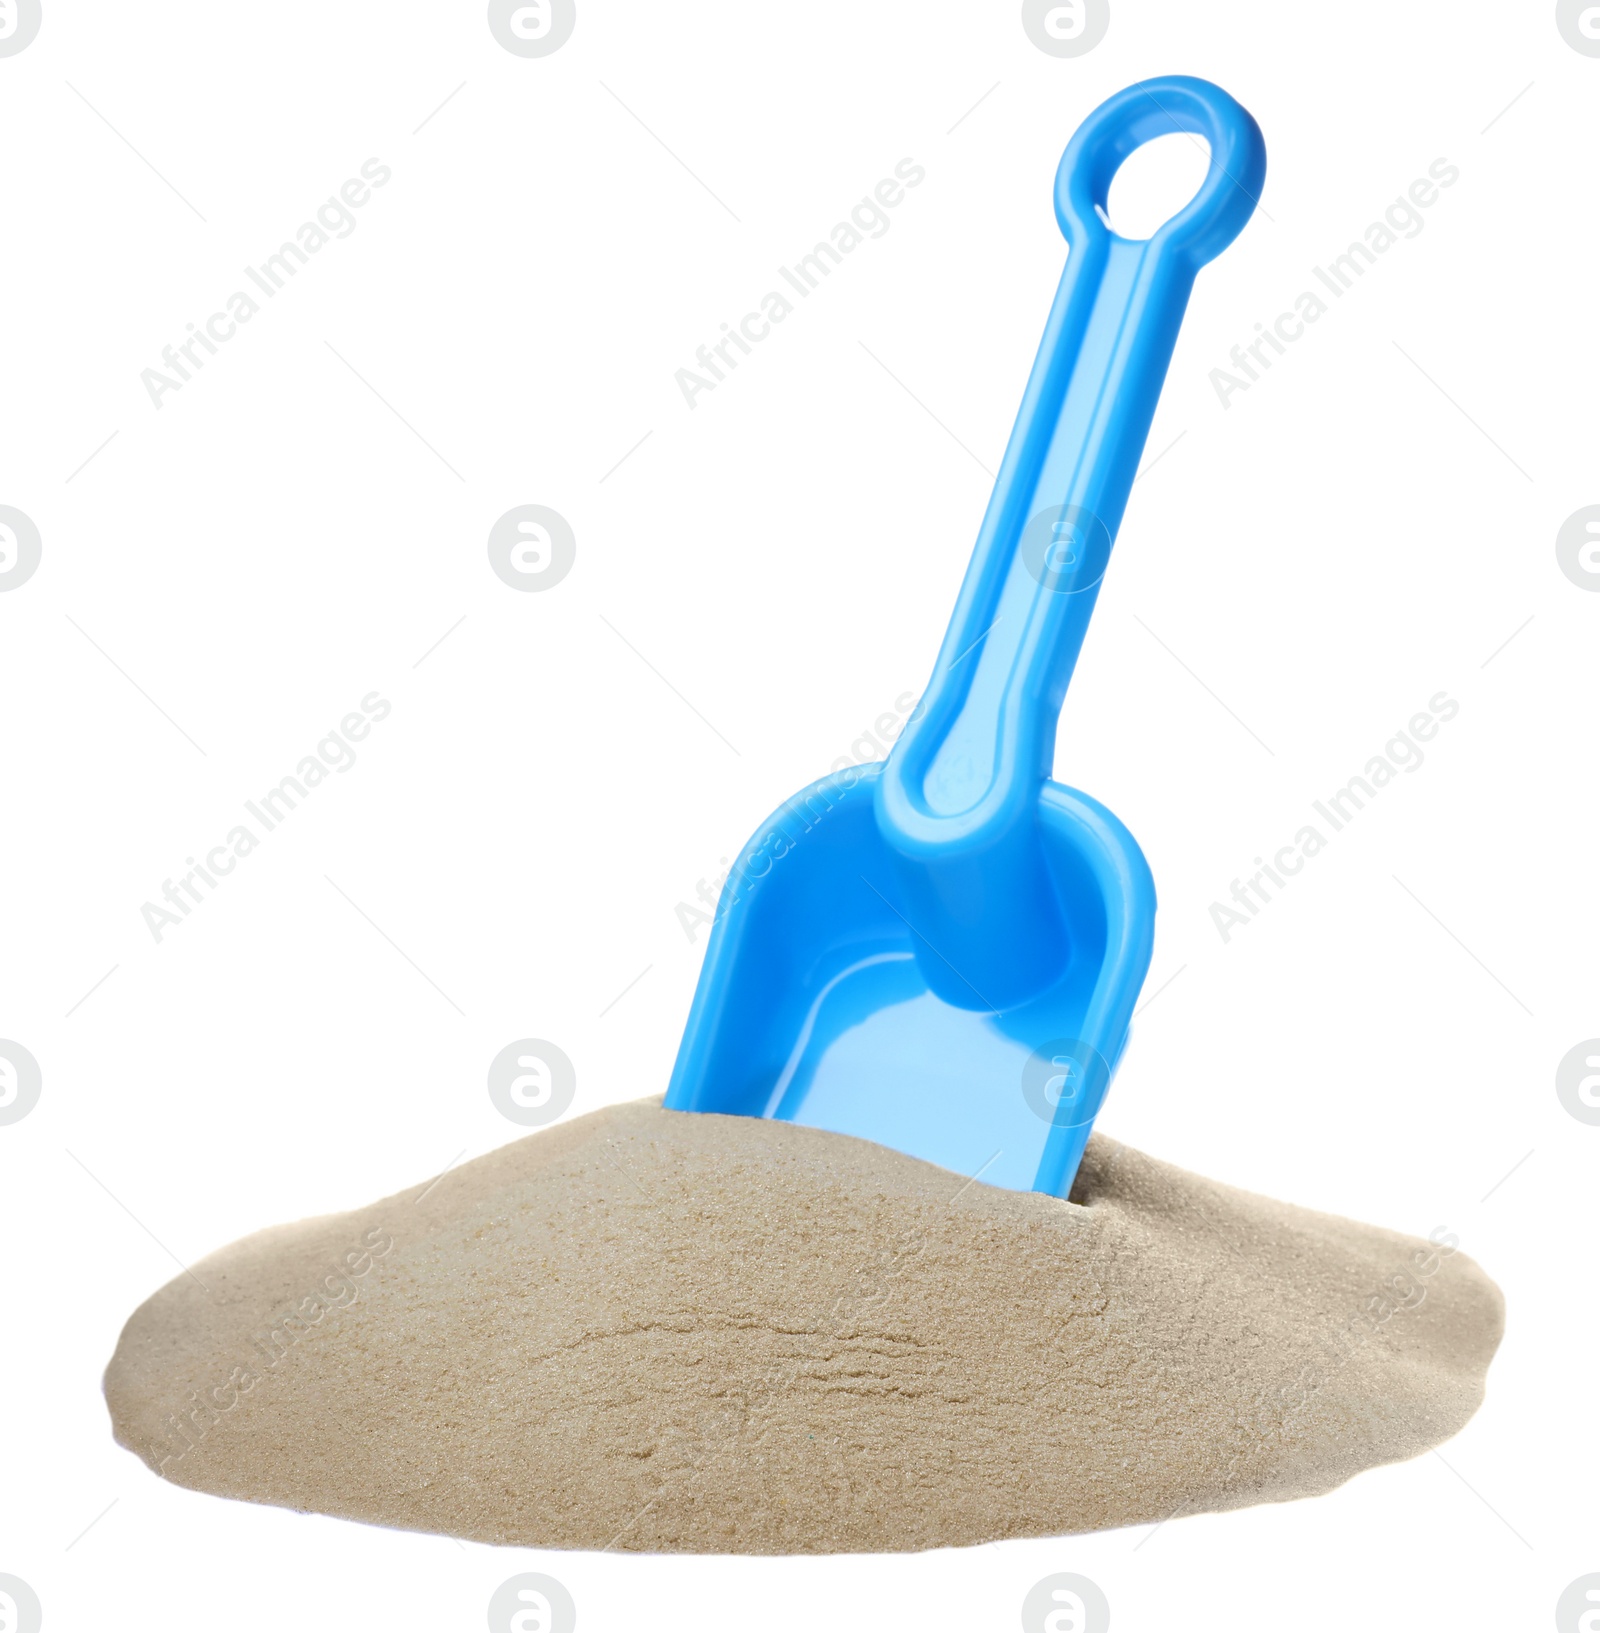 Photo of Pile of sand and light blue plastic toy shovel on white background